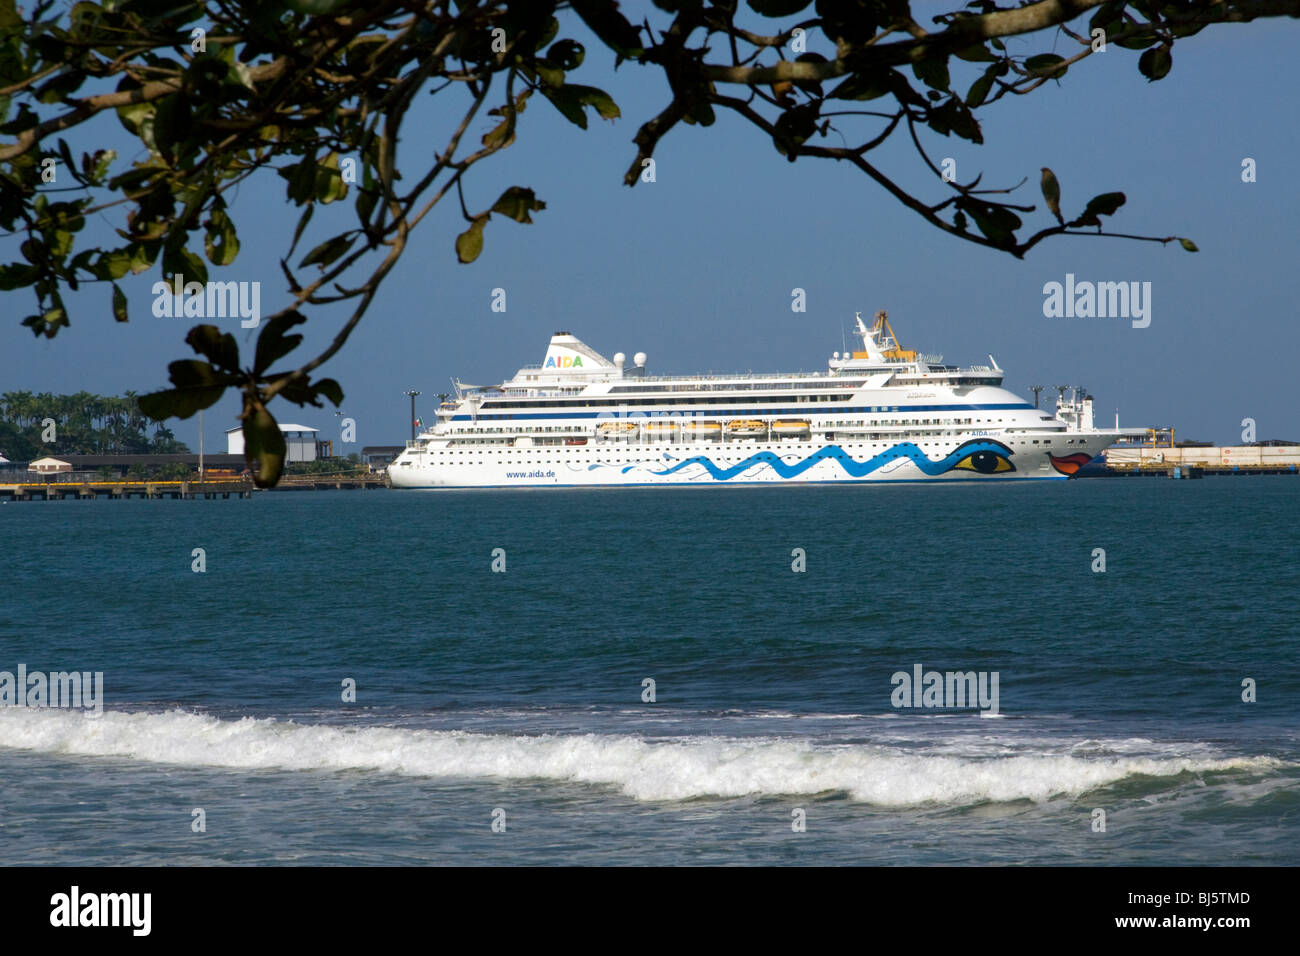 The AIDAaura cruise ship docked at Puerto Limon, Costa Rica. Stock Photo